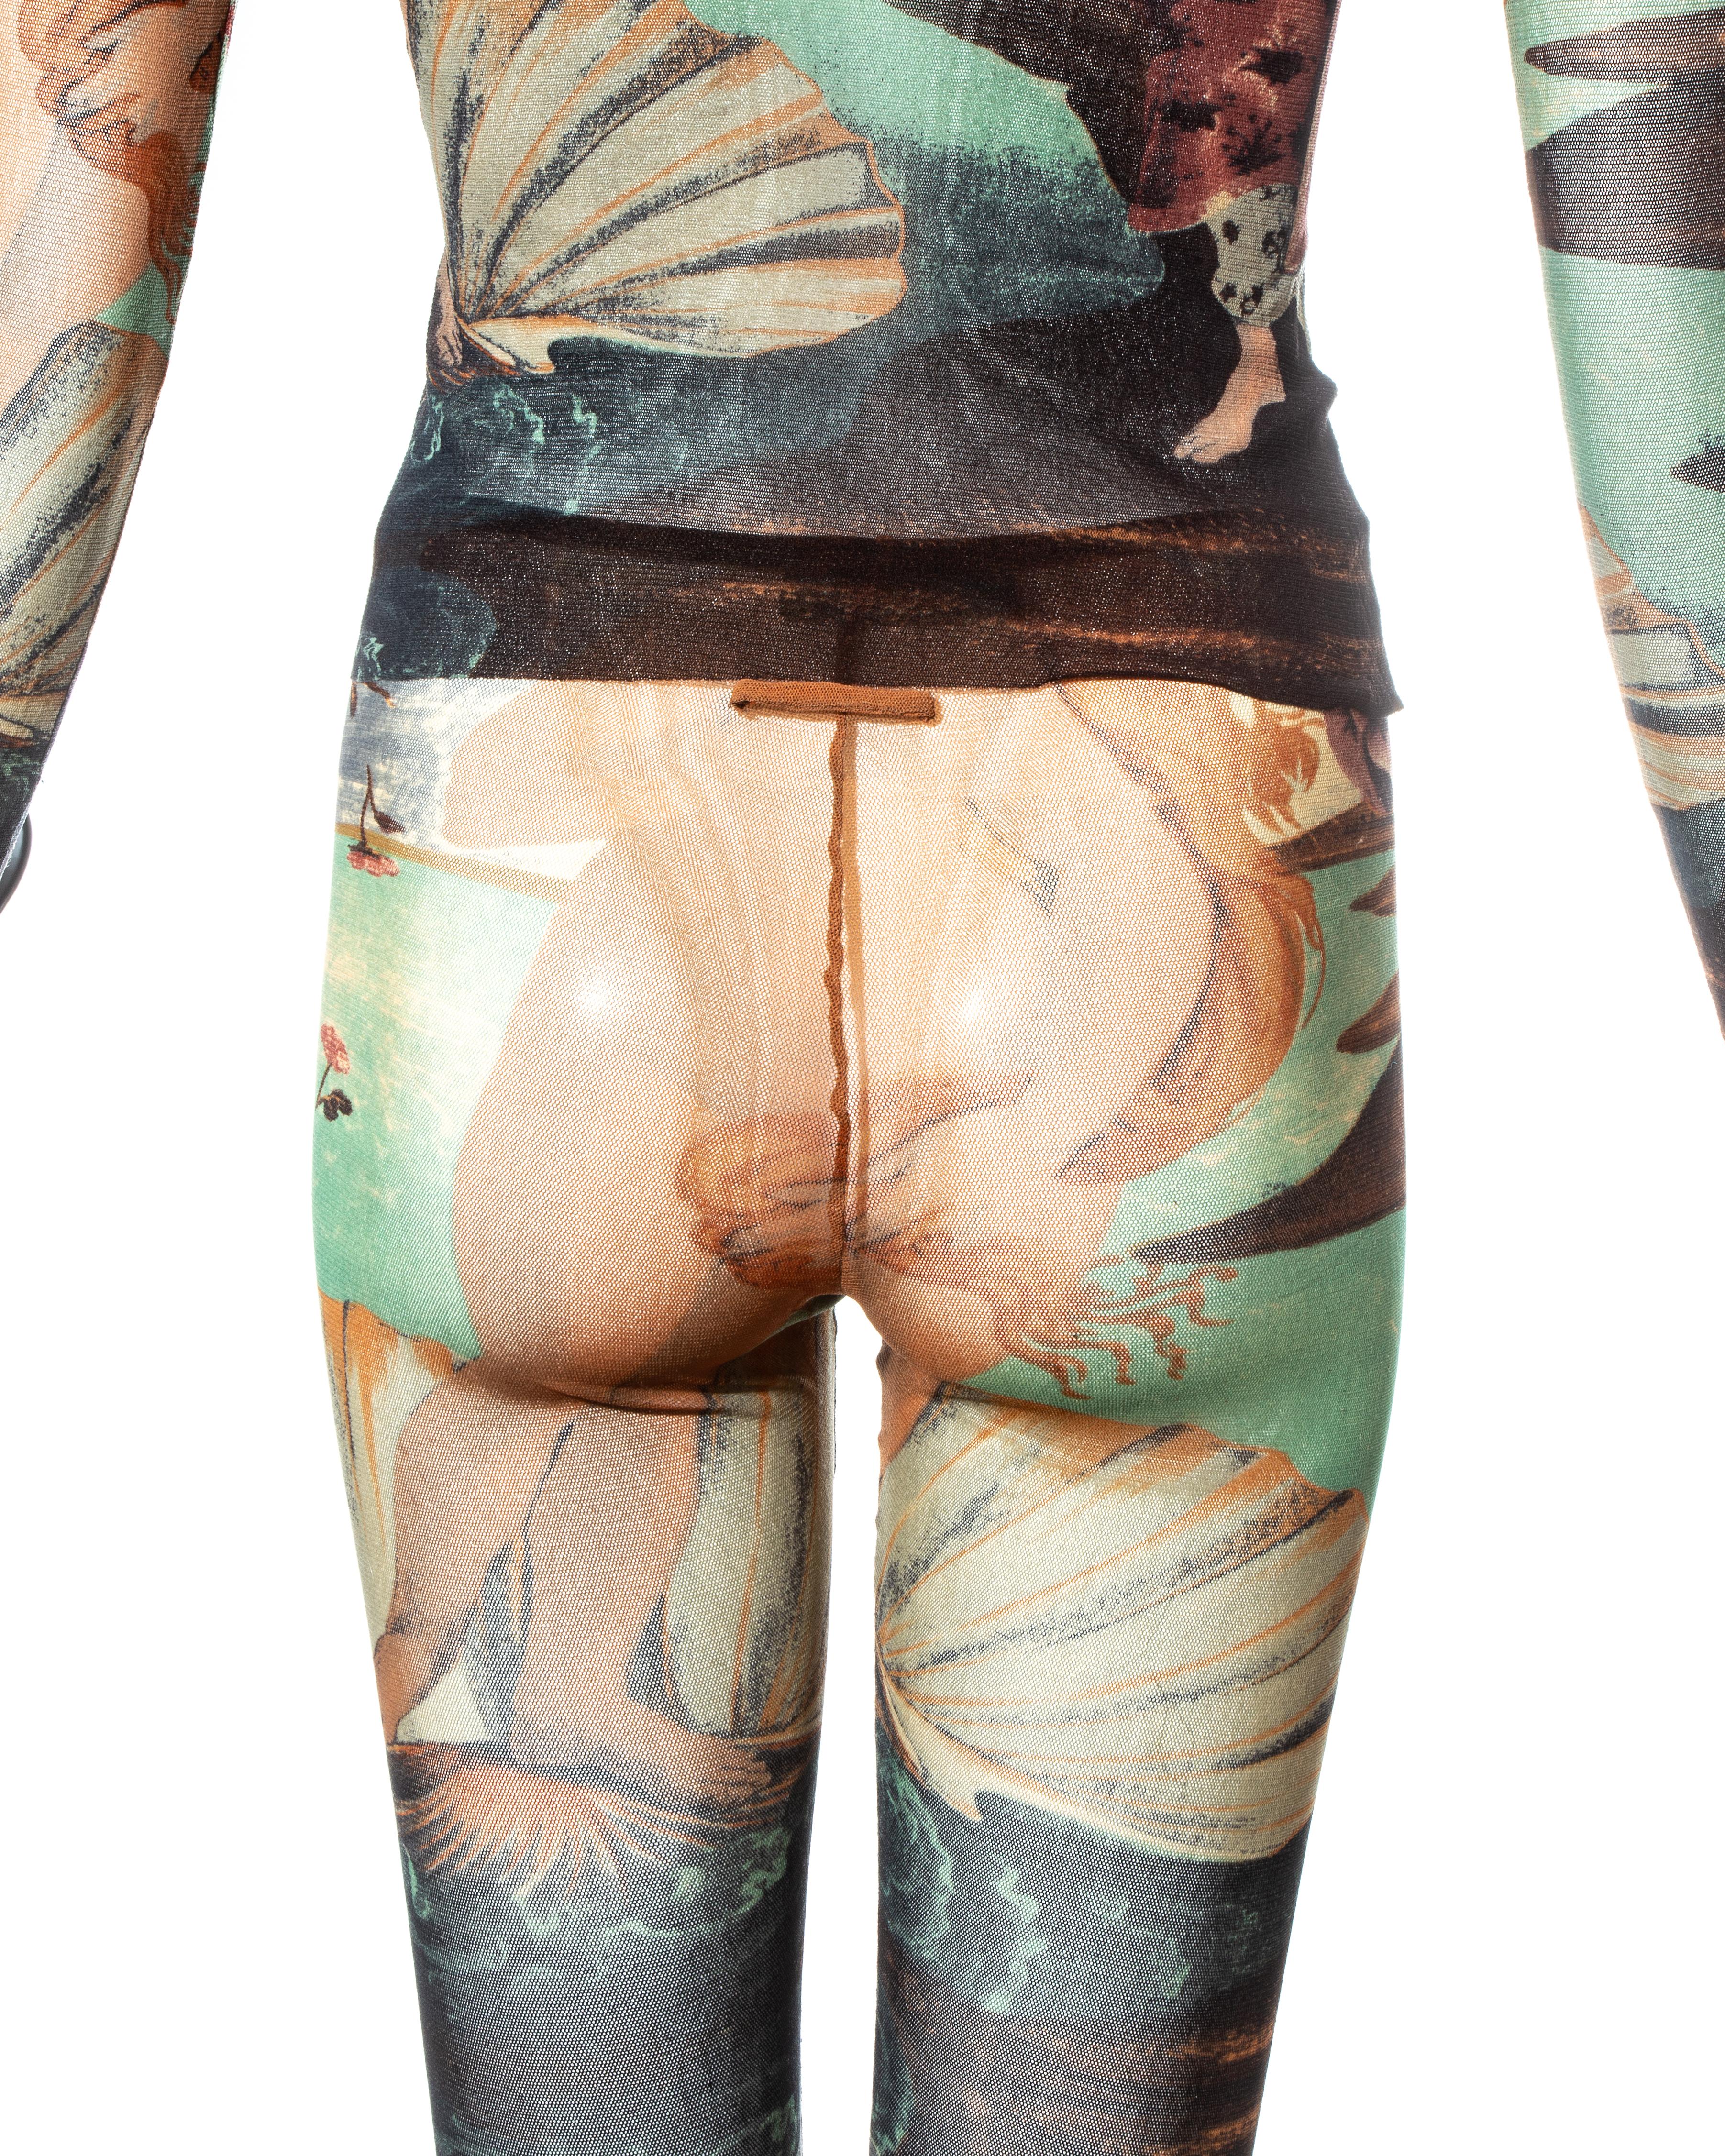 Brown Jean Paul Gaultier 'The Birth of Venus' printed mesh top and leggings, ss 1995